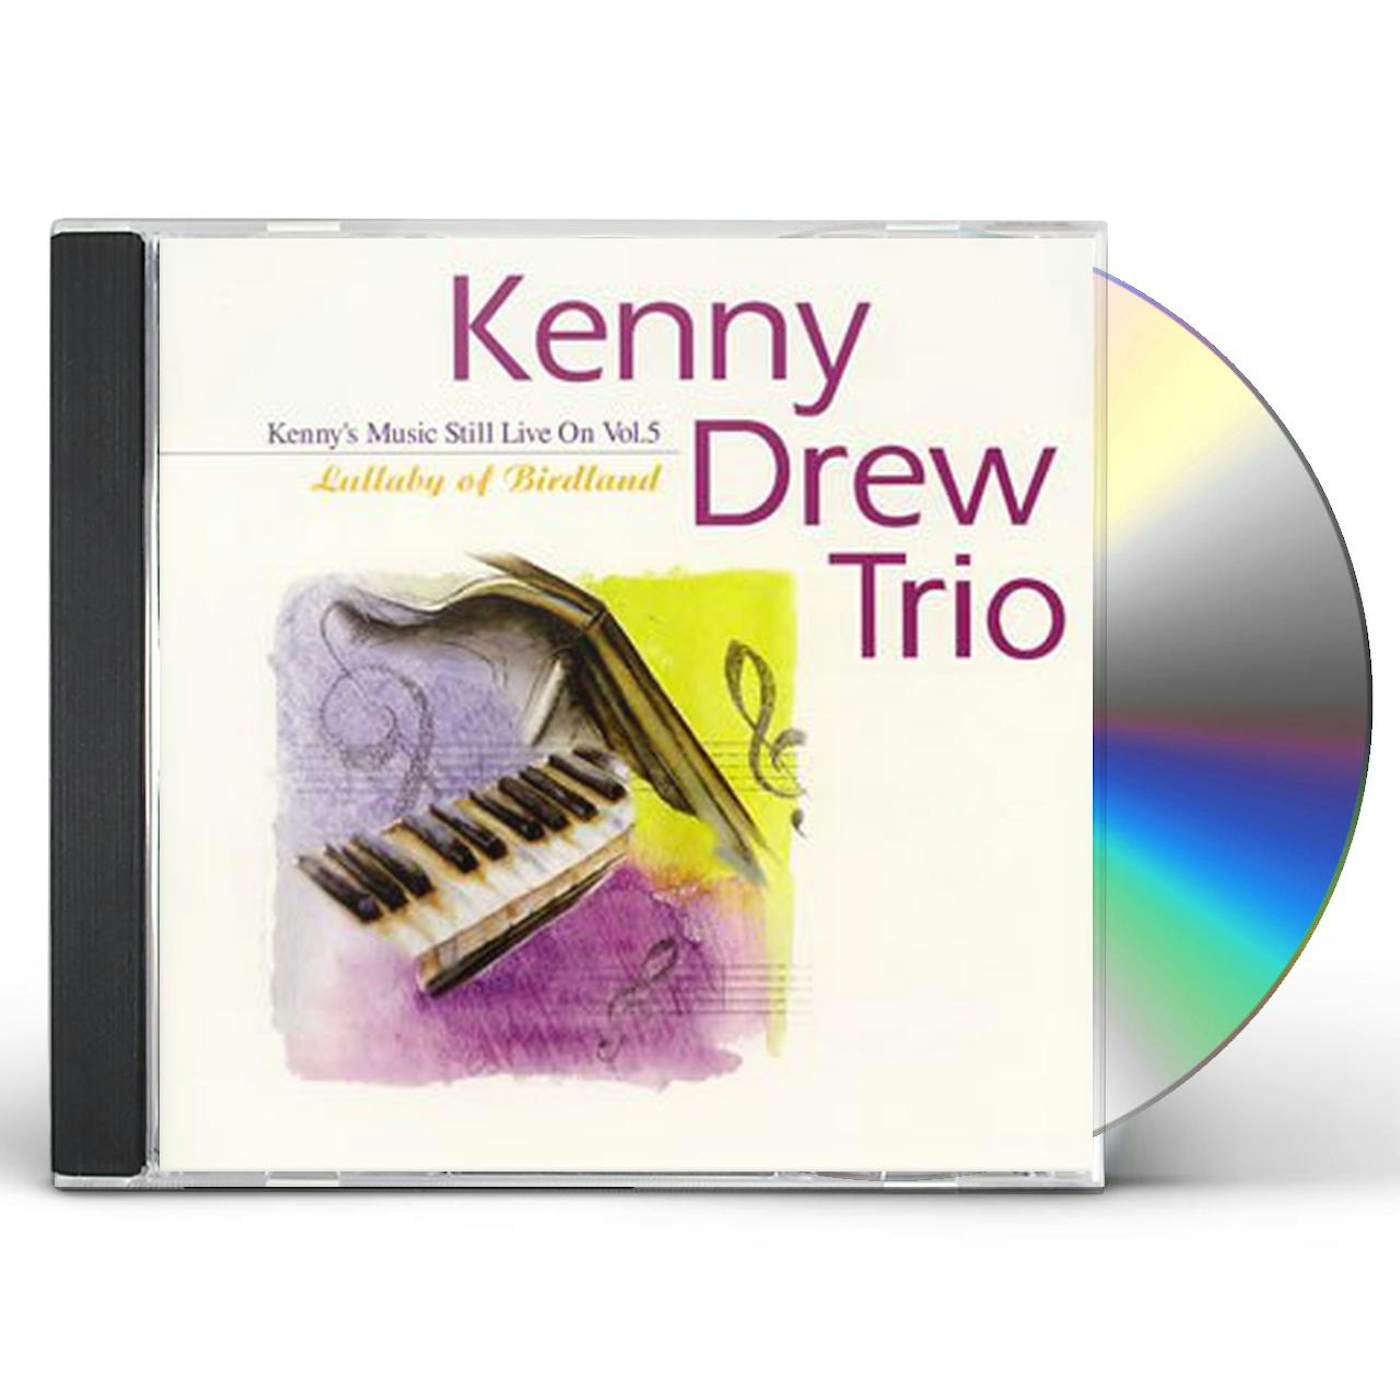 Kenny Drew LULLUBY AT BIRDLAND CD